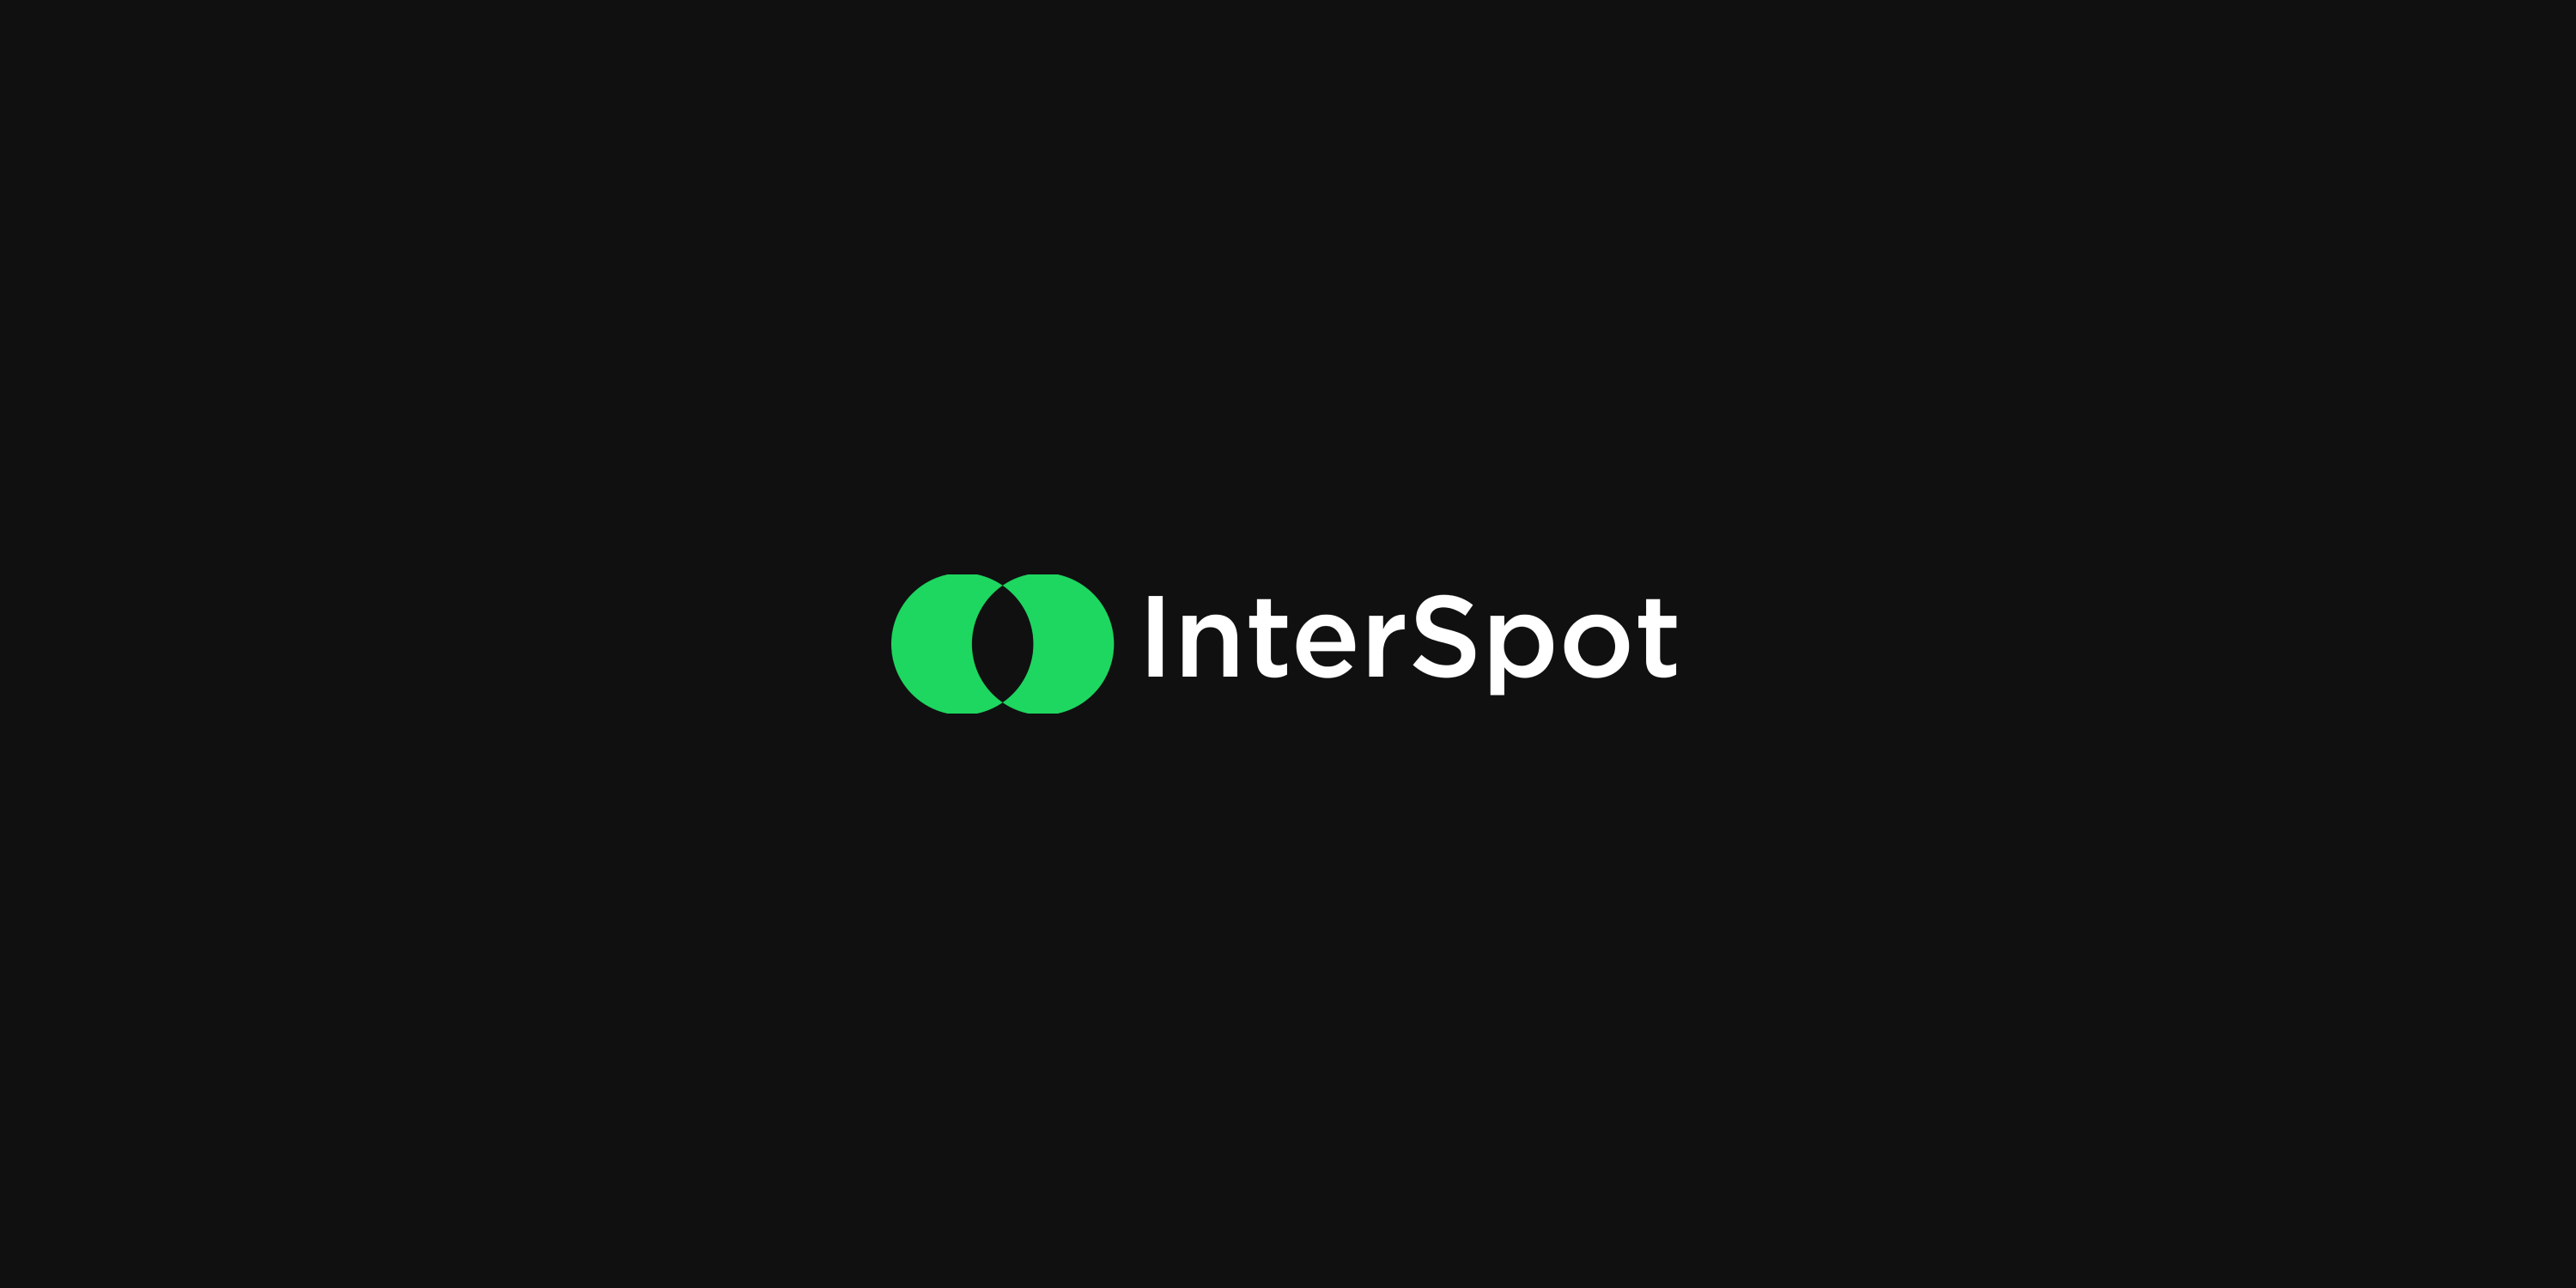 InterSpot